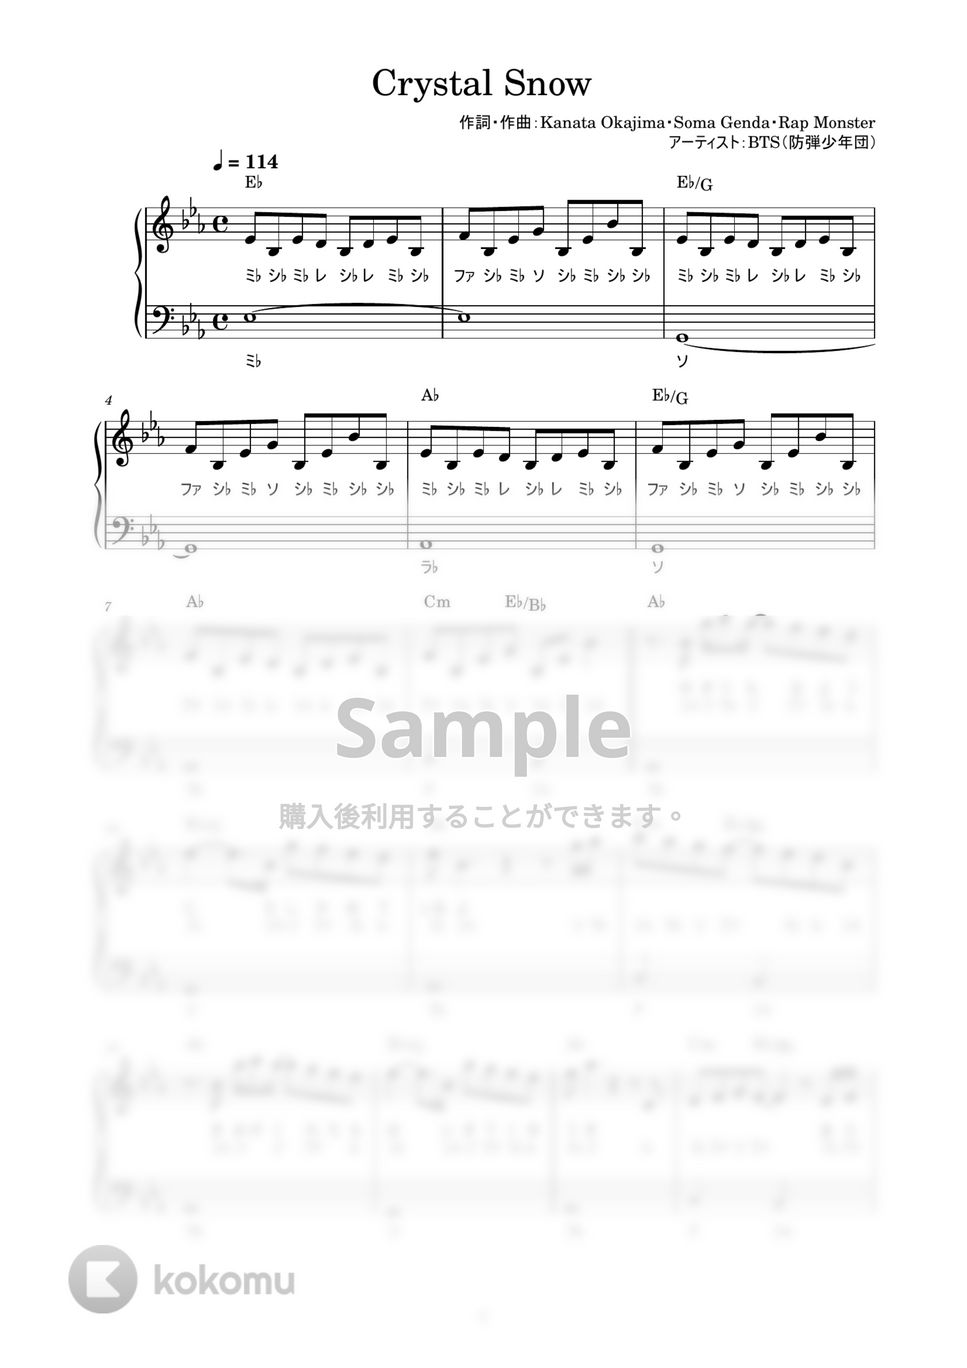 BTS - Crystal Snow (かんたん / 歌詞付き / ドレミ付き / 初心者) by piano.tokyo